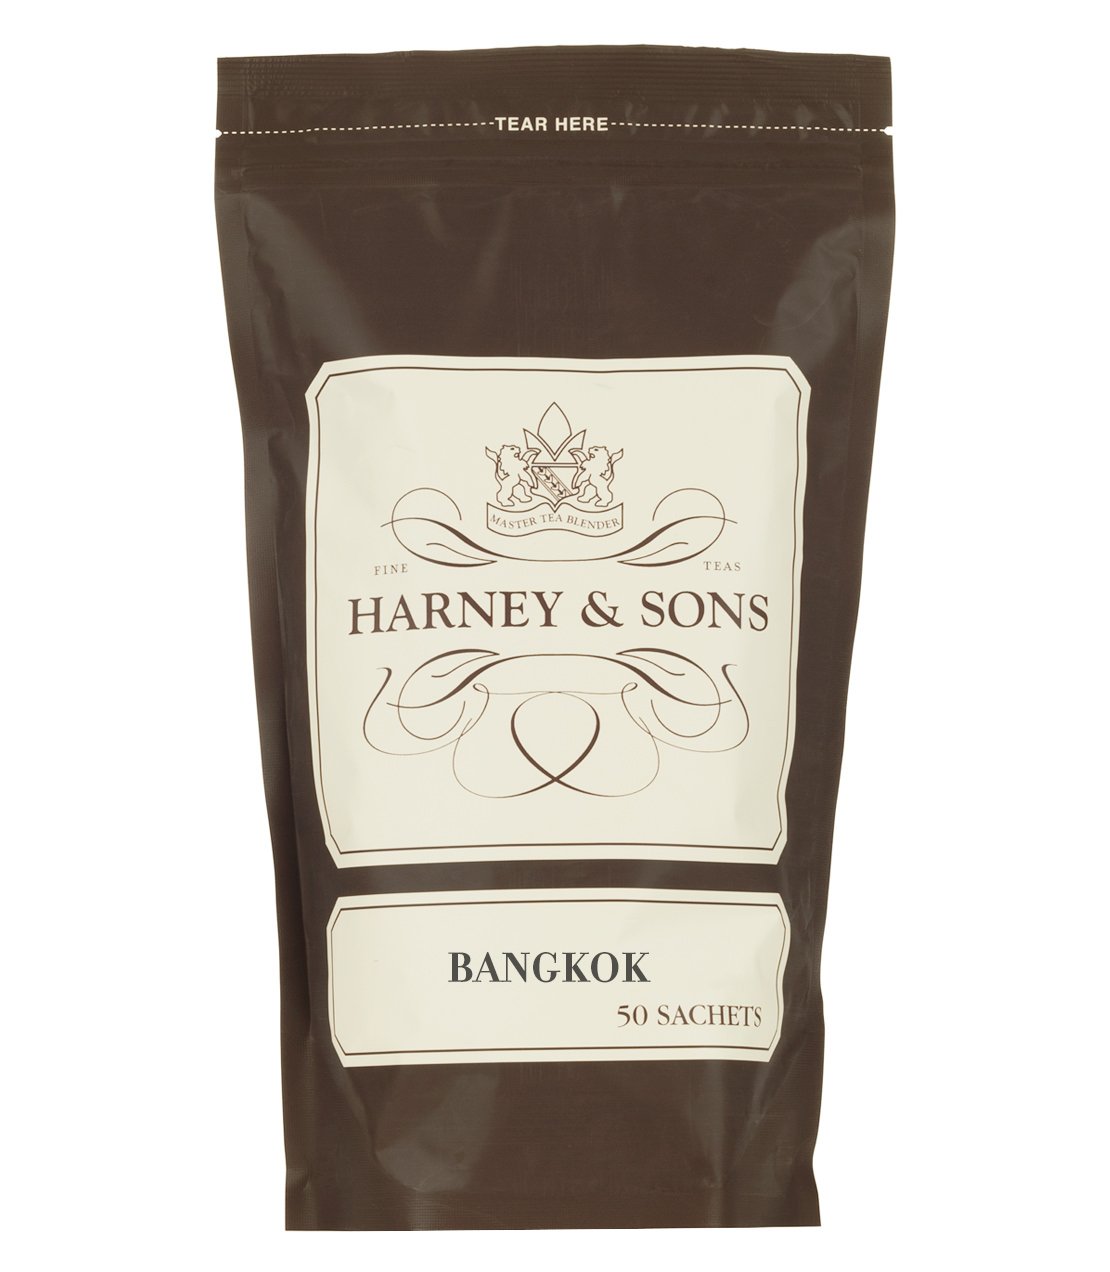 Green tea with Coconut, Lemongrass and Vanilla - Bangkok, Bag of 50 Sachets - Harney & Sons Fie Teas Europe